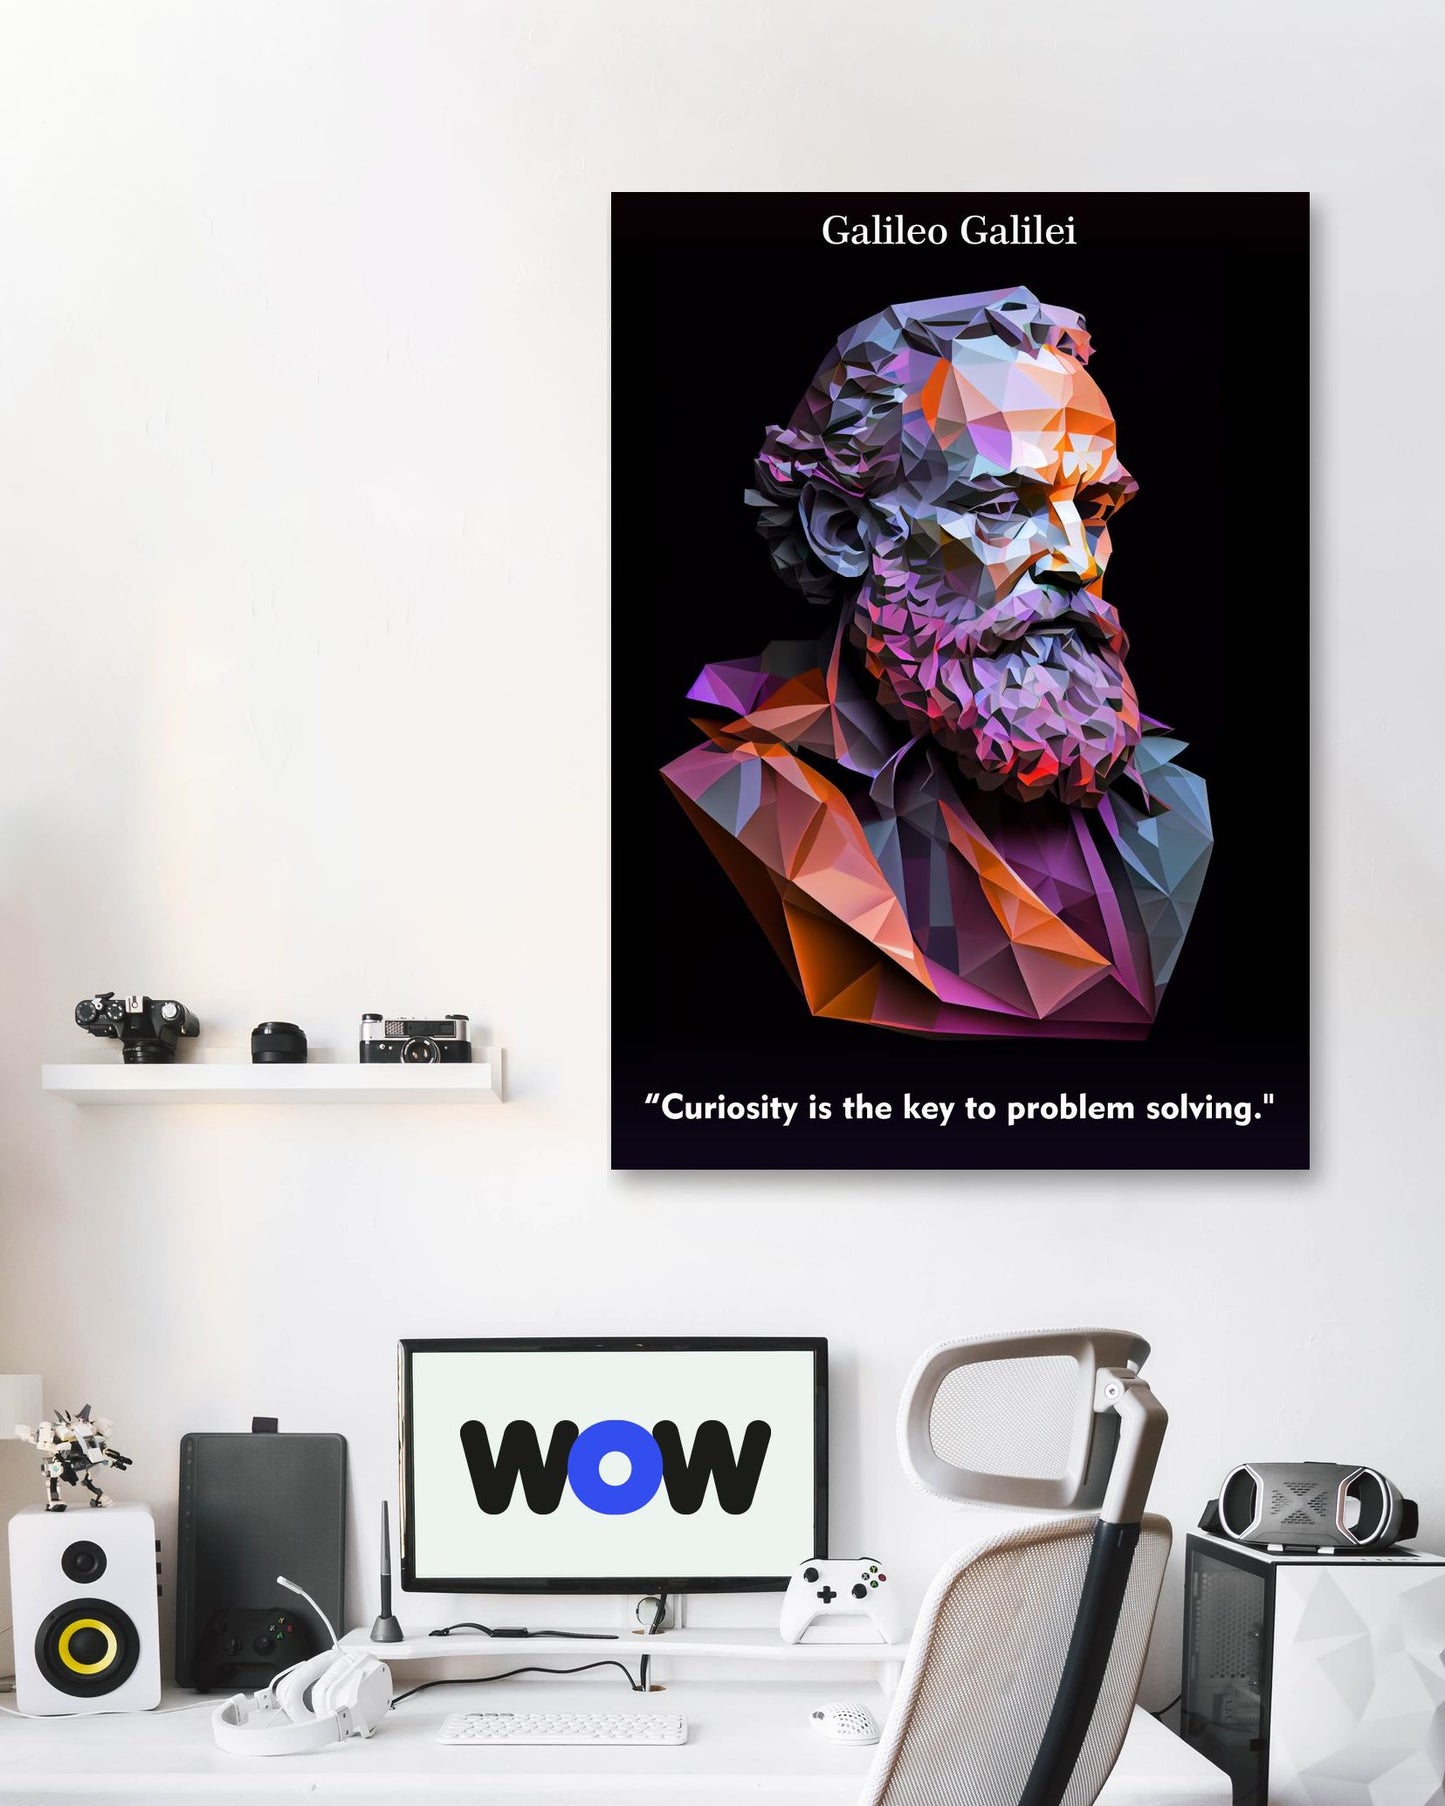 Galileo Galilei Quotes - @WpapArtist